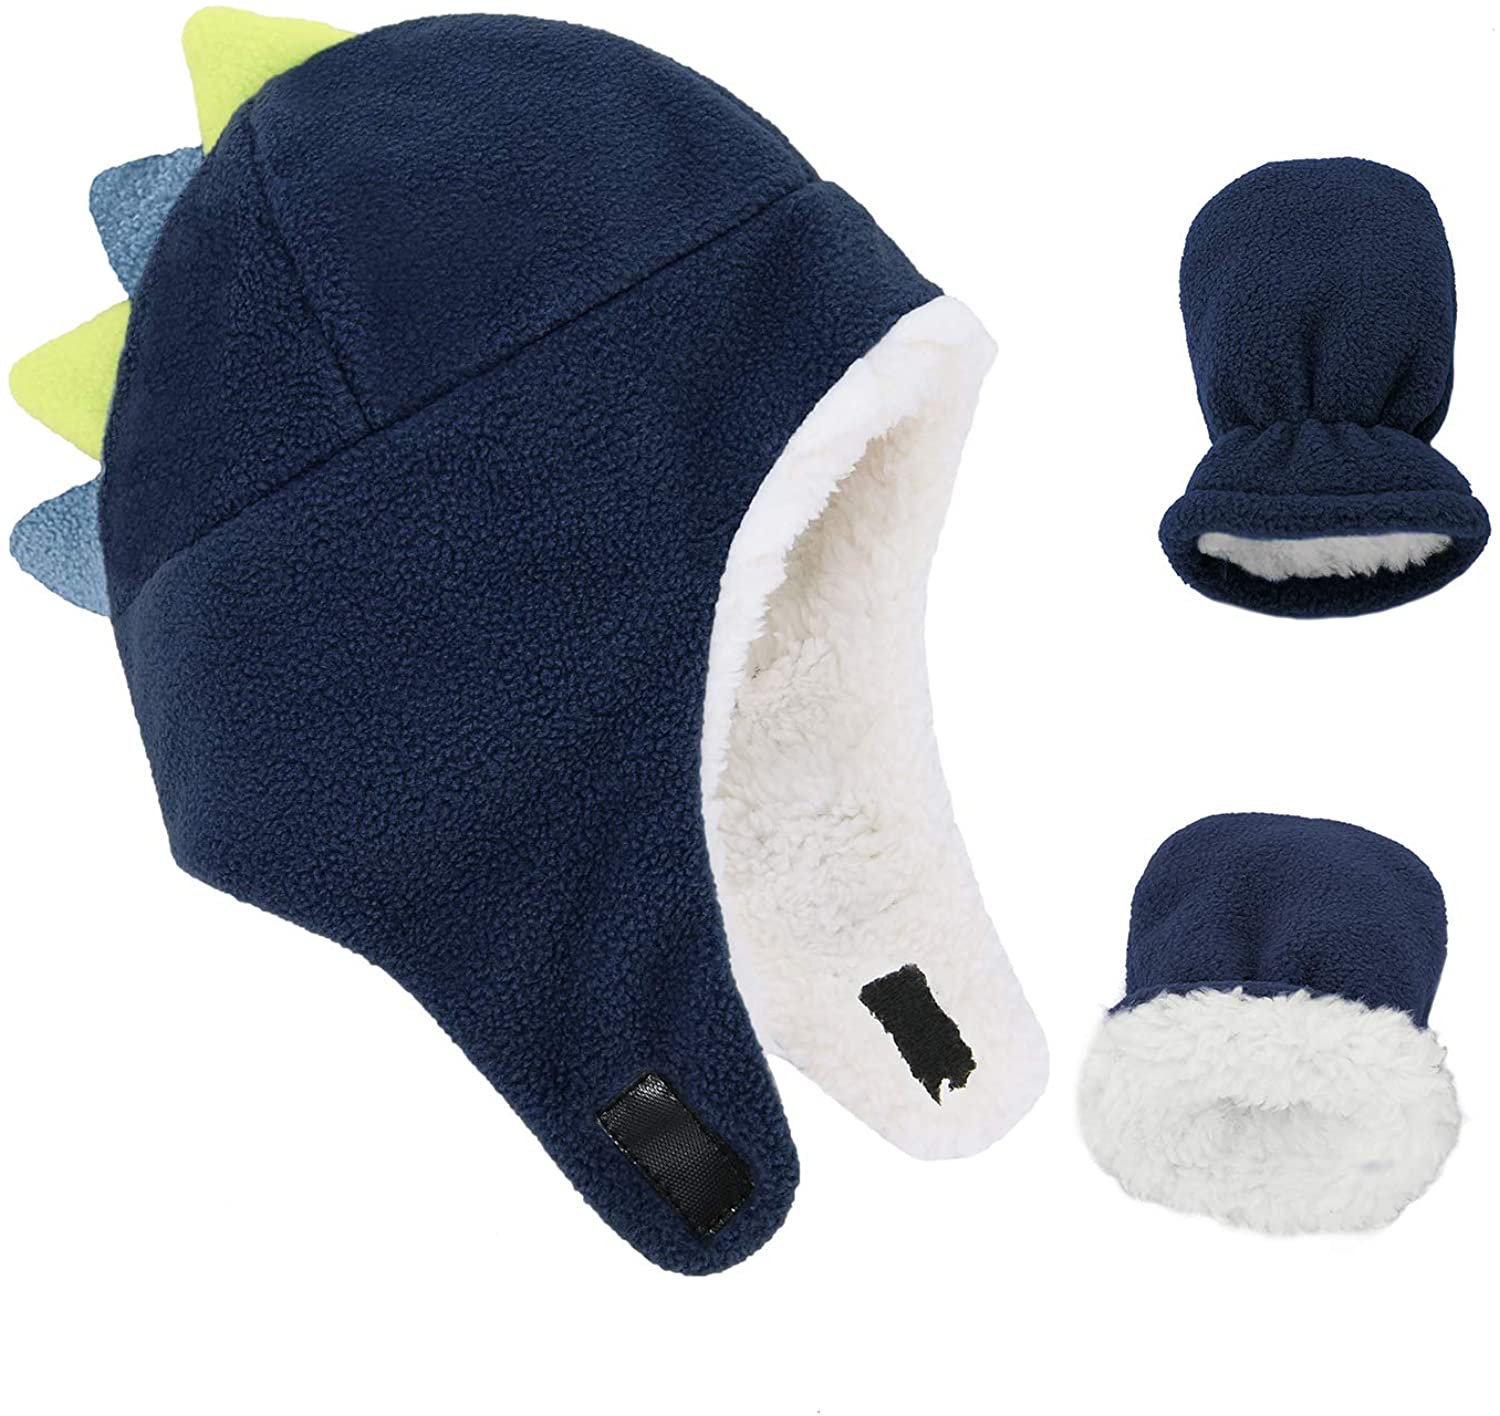 Baby Boy Winter Hat and Gloves Set Knit Earflap Beanie Warm Fleece Cap for Boy Girl Toddler Kids 